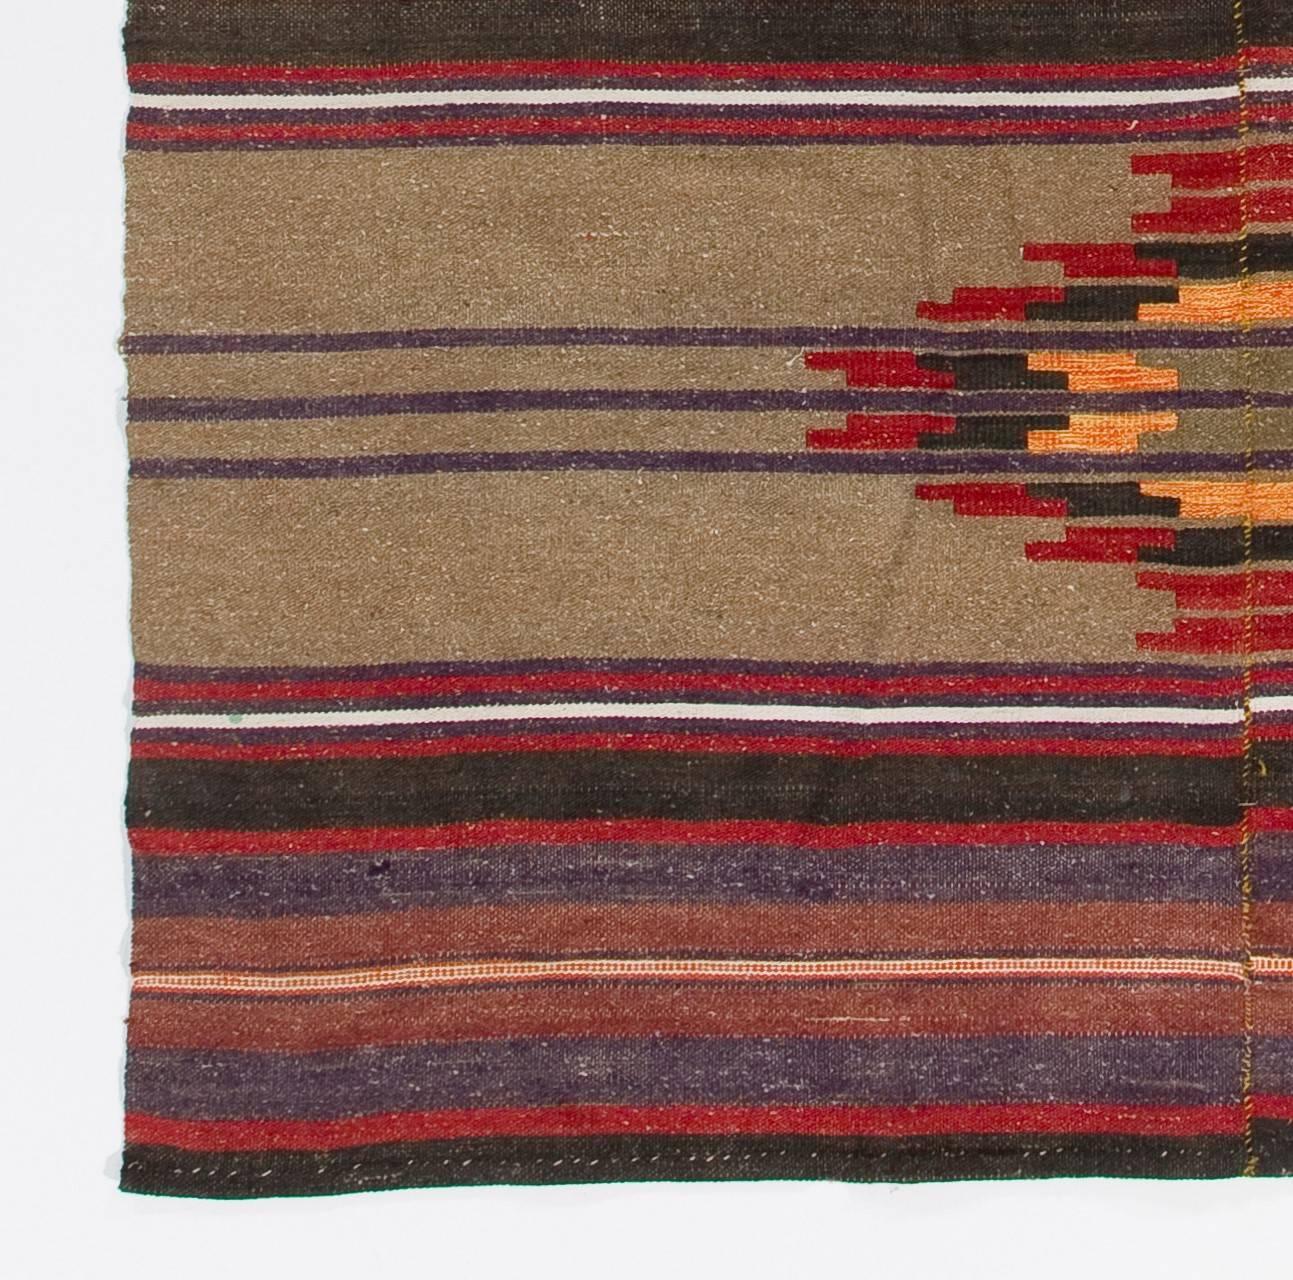 Hand-Woven Vintage Geometric Anatolian Flat-Weave Kilim Rug. South Western Style. 100% Wool